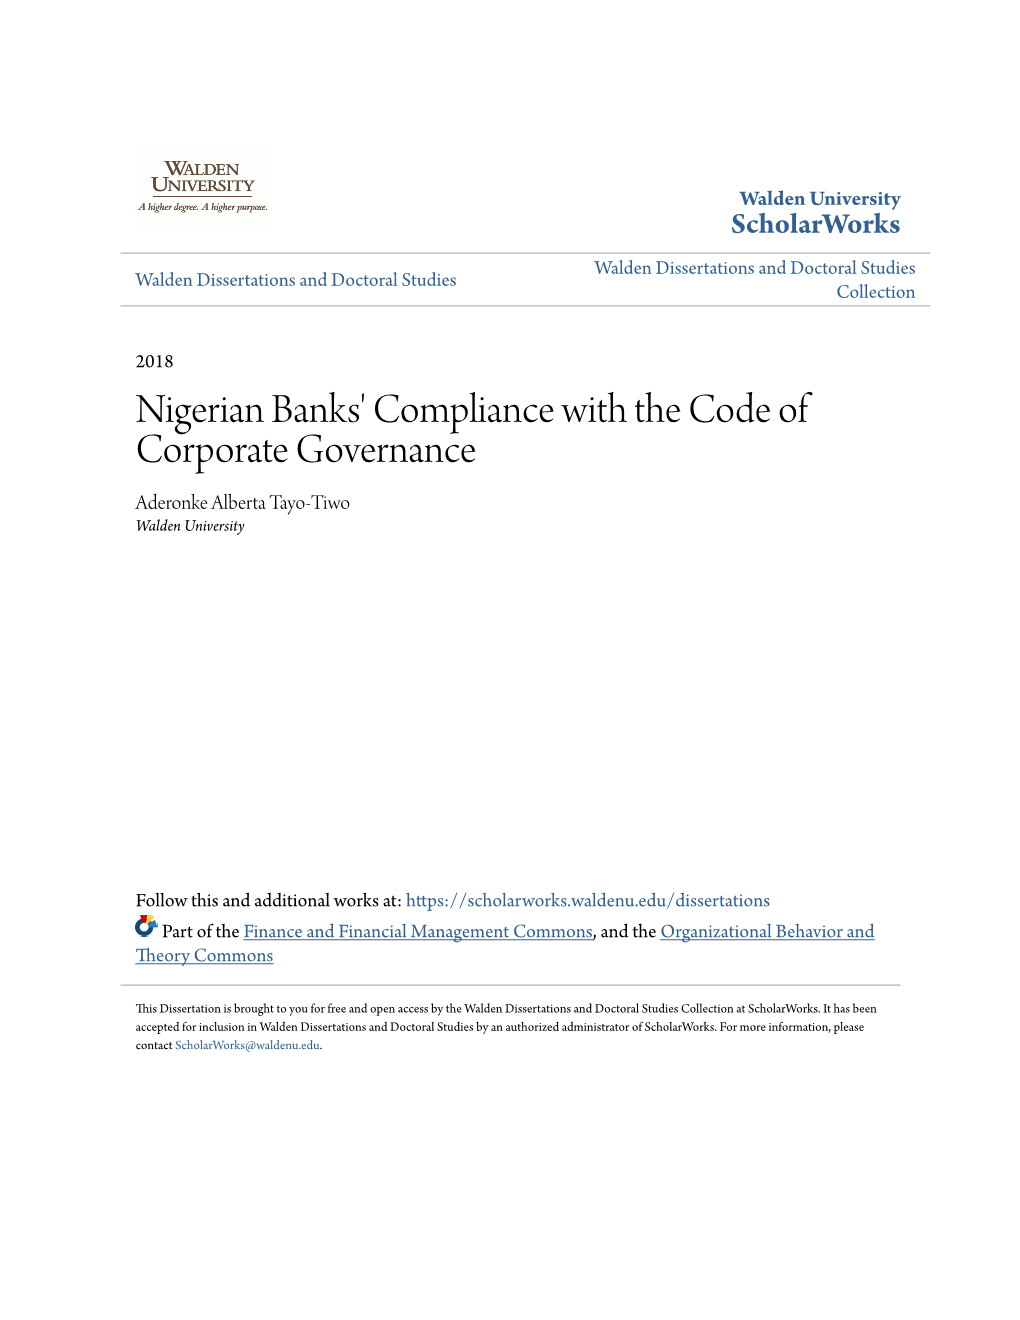 Nigerian Banks' Compliance with the Code of Corporate Governance Aderonke Alberta Tayo-Tiwo Walden University